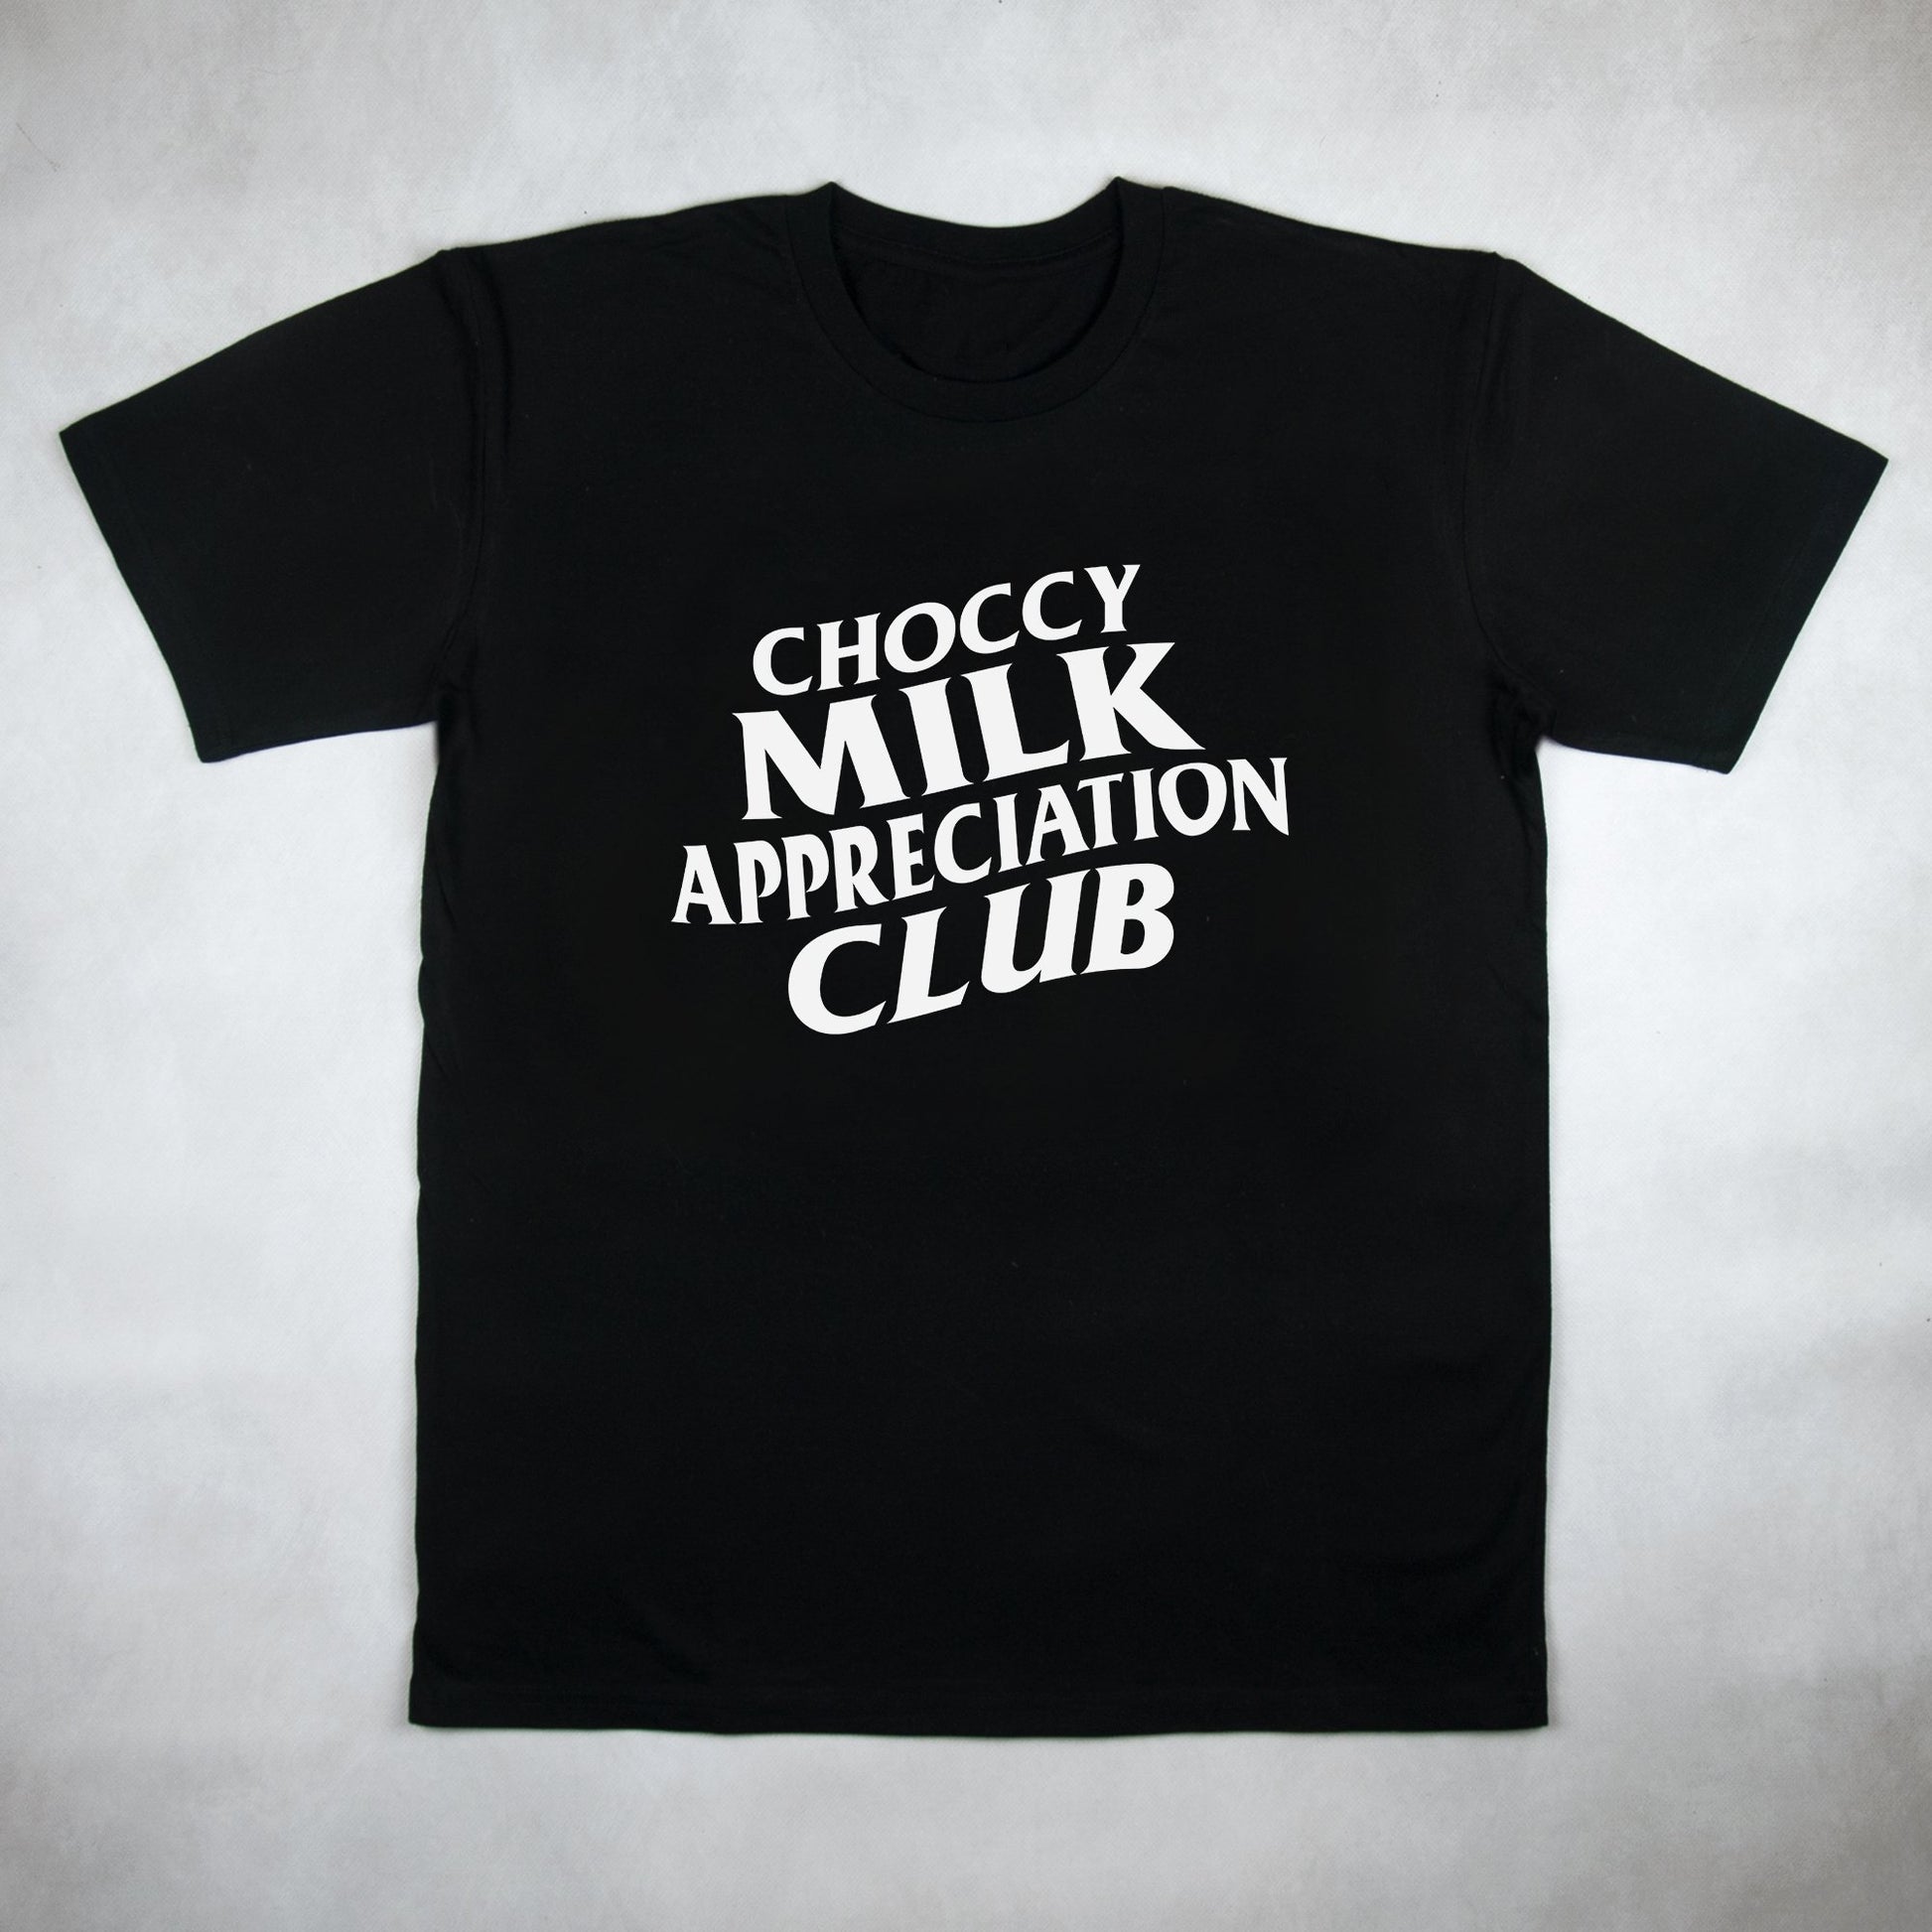 Classy Duds Short Sleeve T-Shirts S / Black / Standard Choccy Milk Appreciation Club Tee